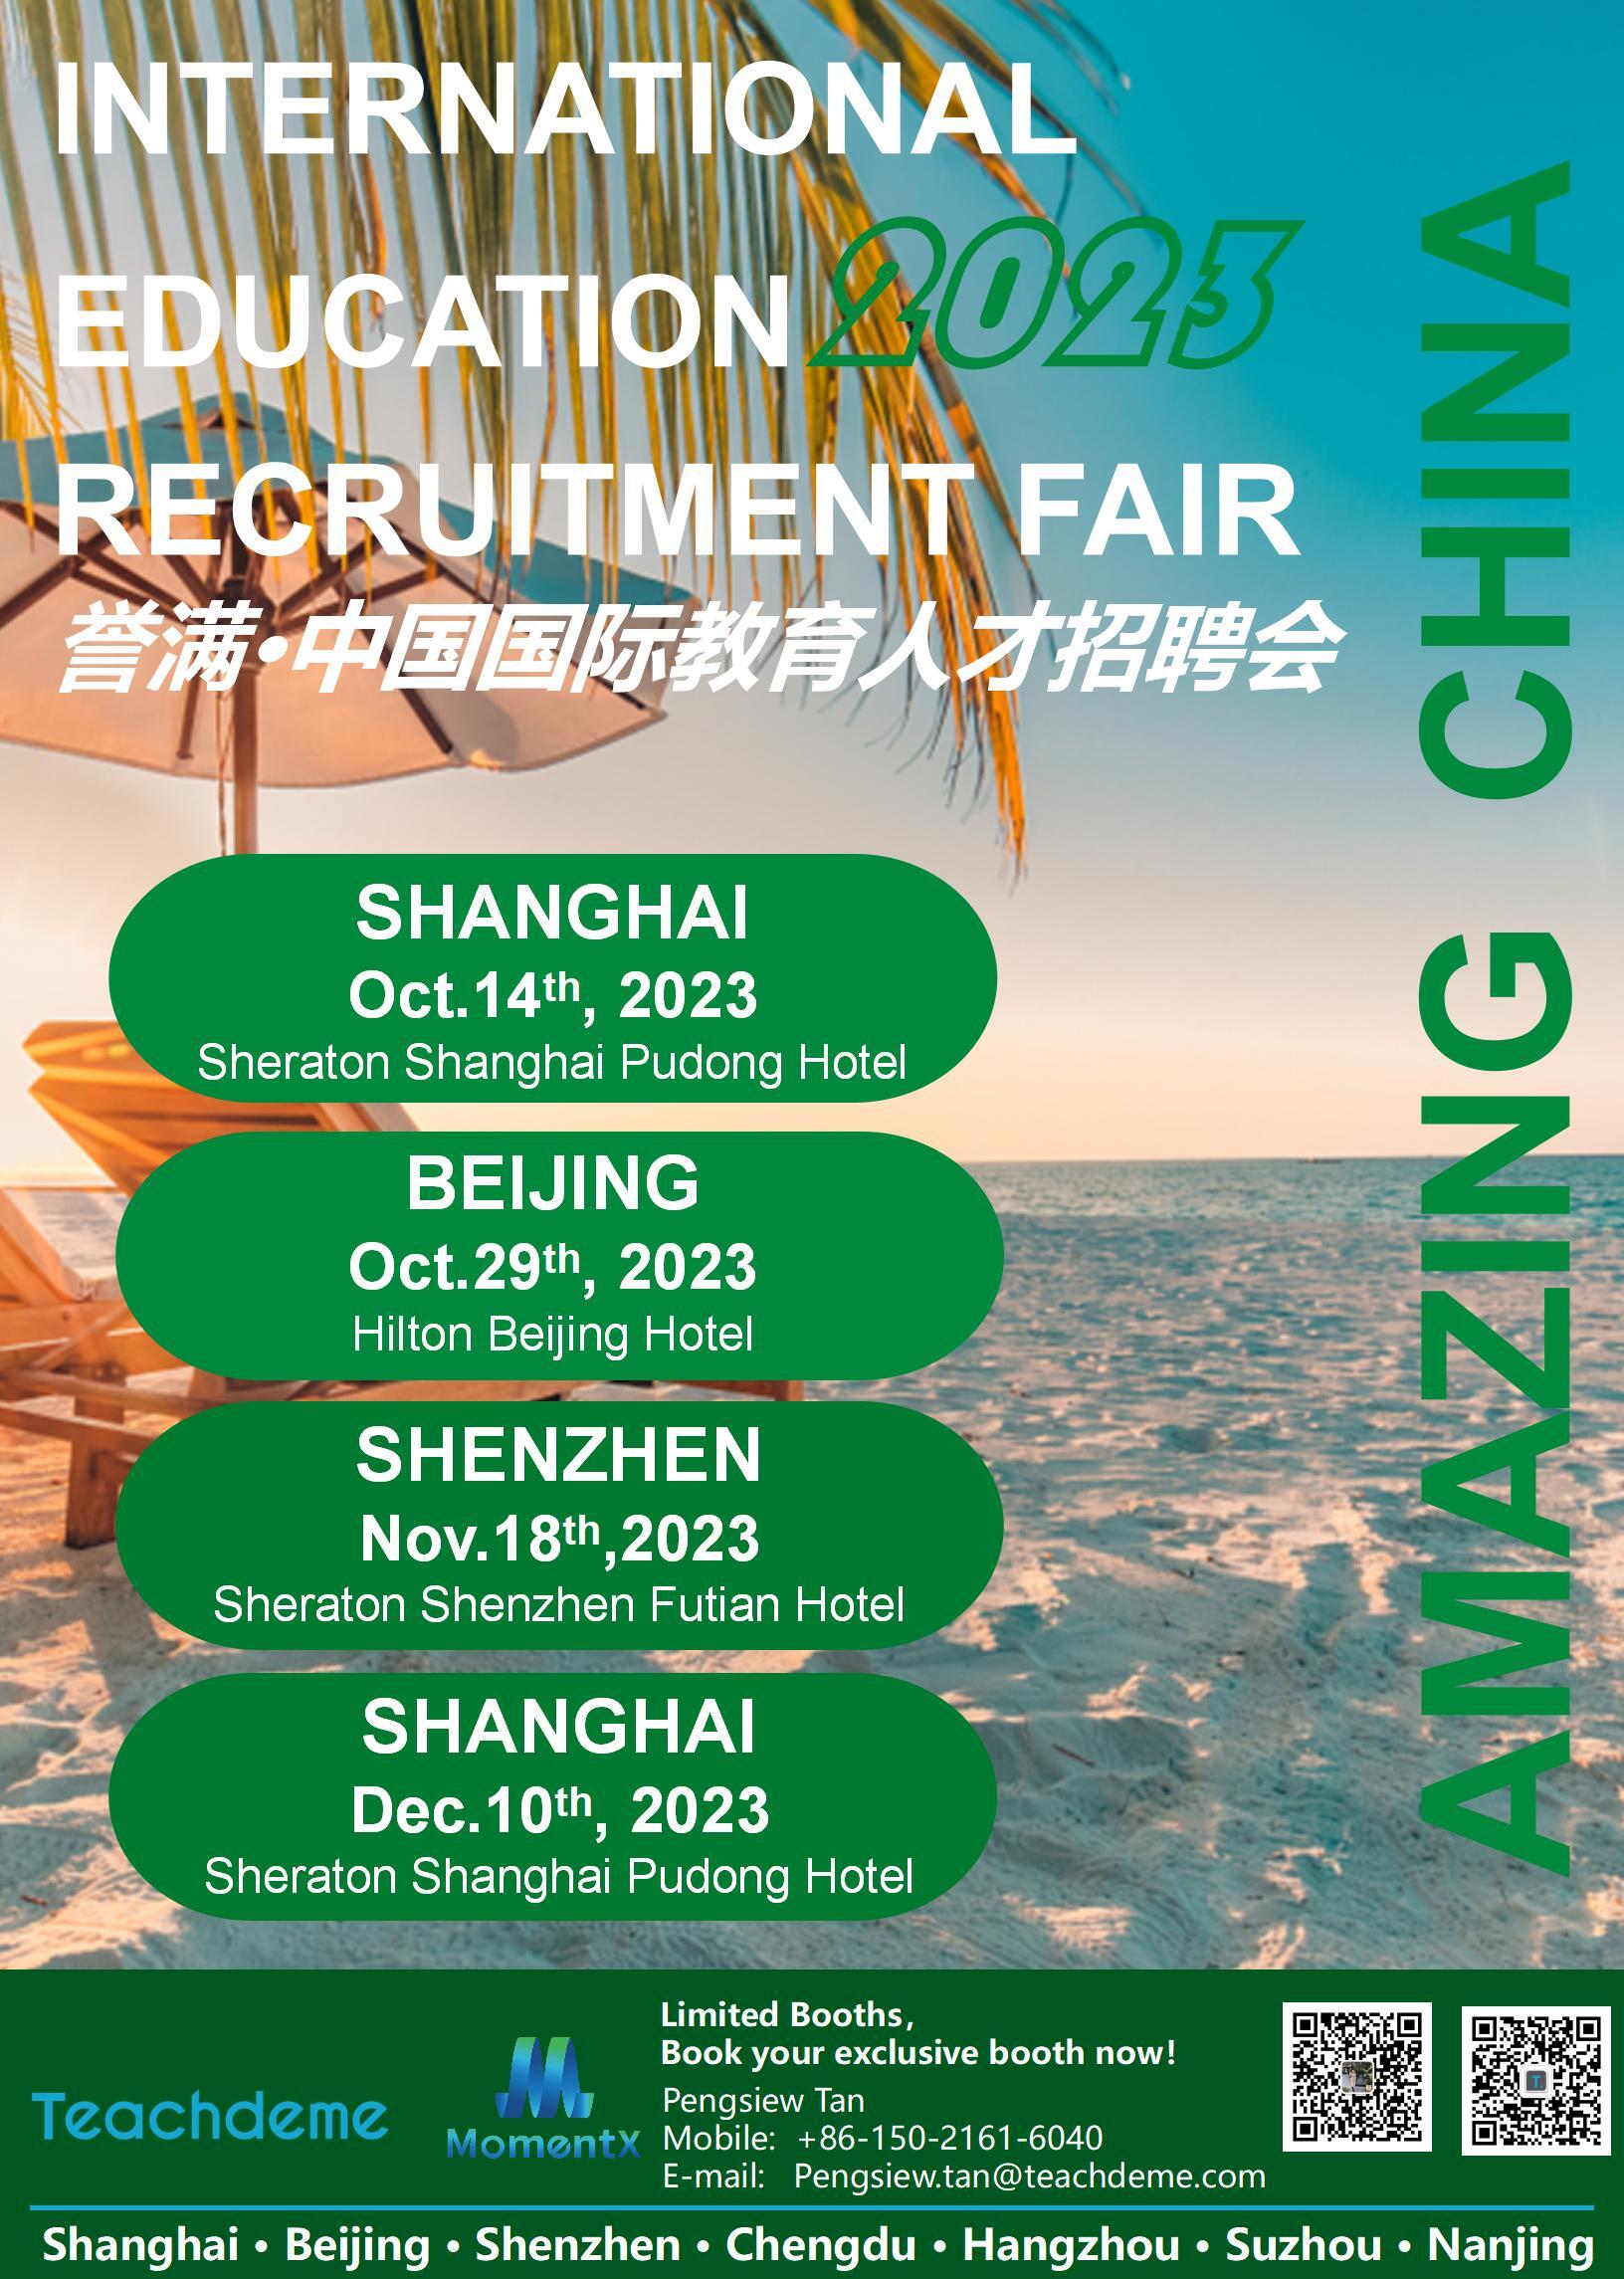 Featured image for “2023 Amazing China International Education Job Fair”